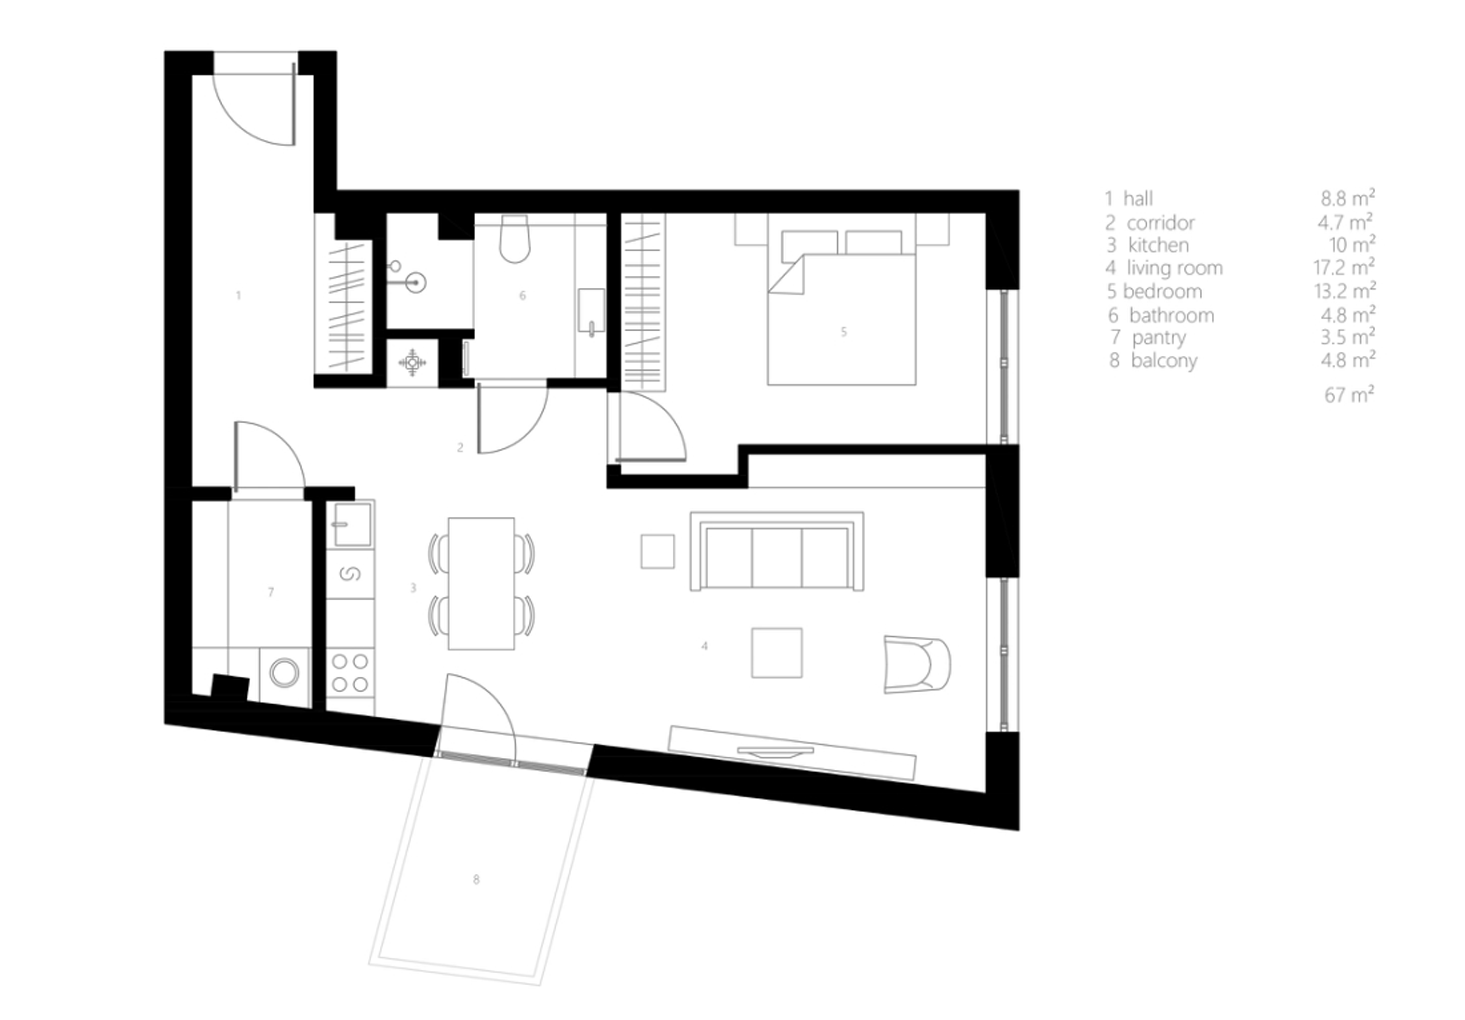 basanaviciaus-apartment-vilnius-lithuania-akta-interior-design_dezeen_floor-plan副本